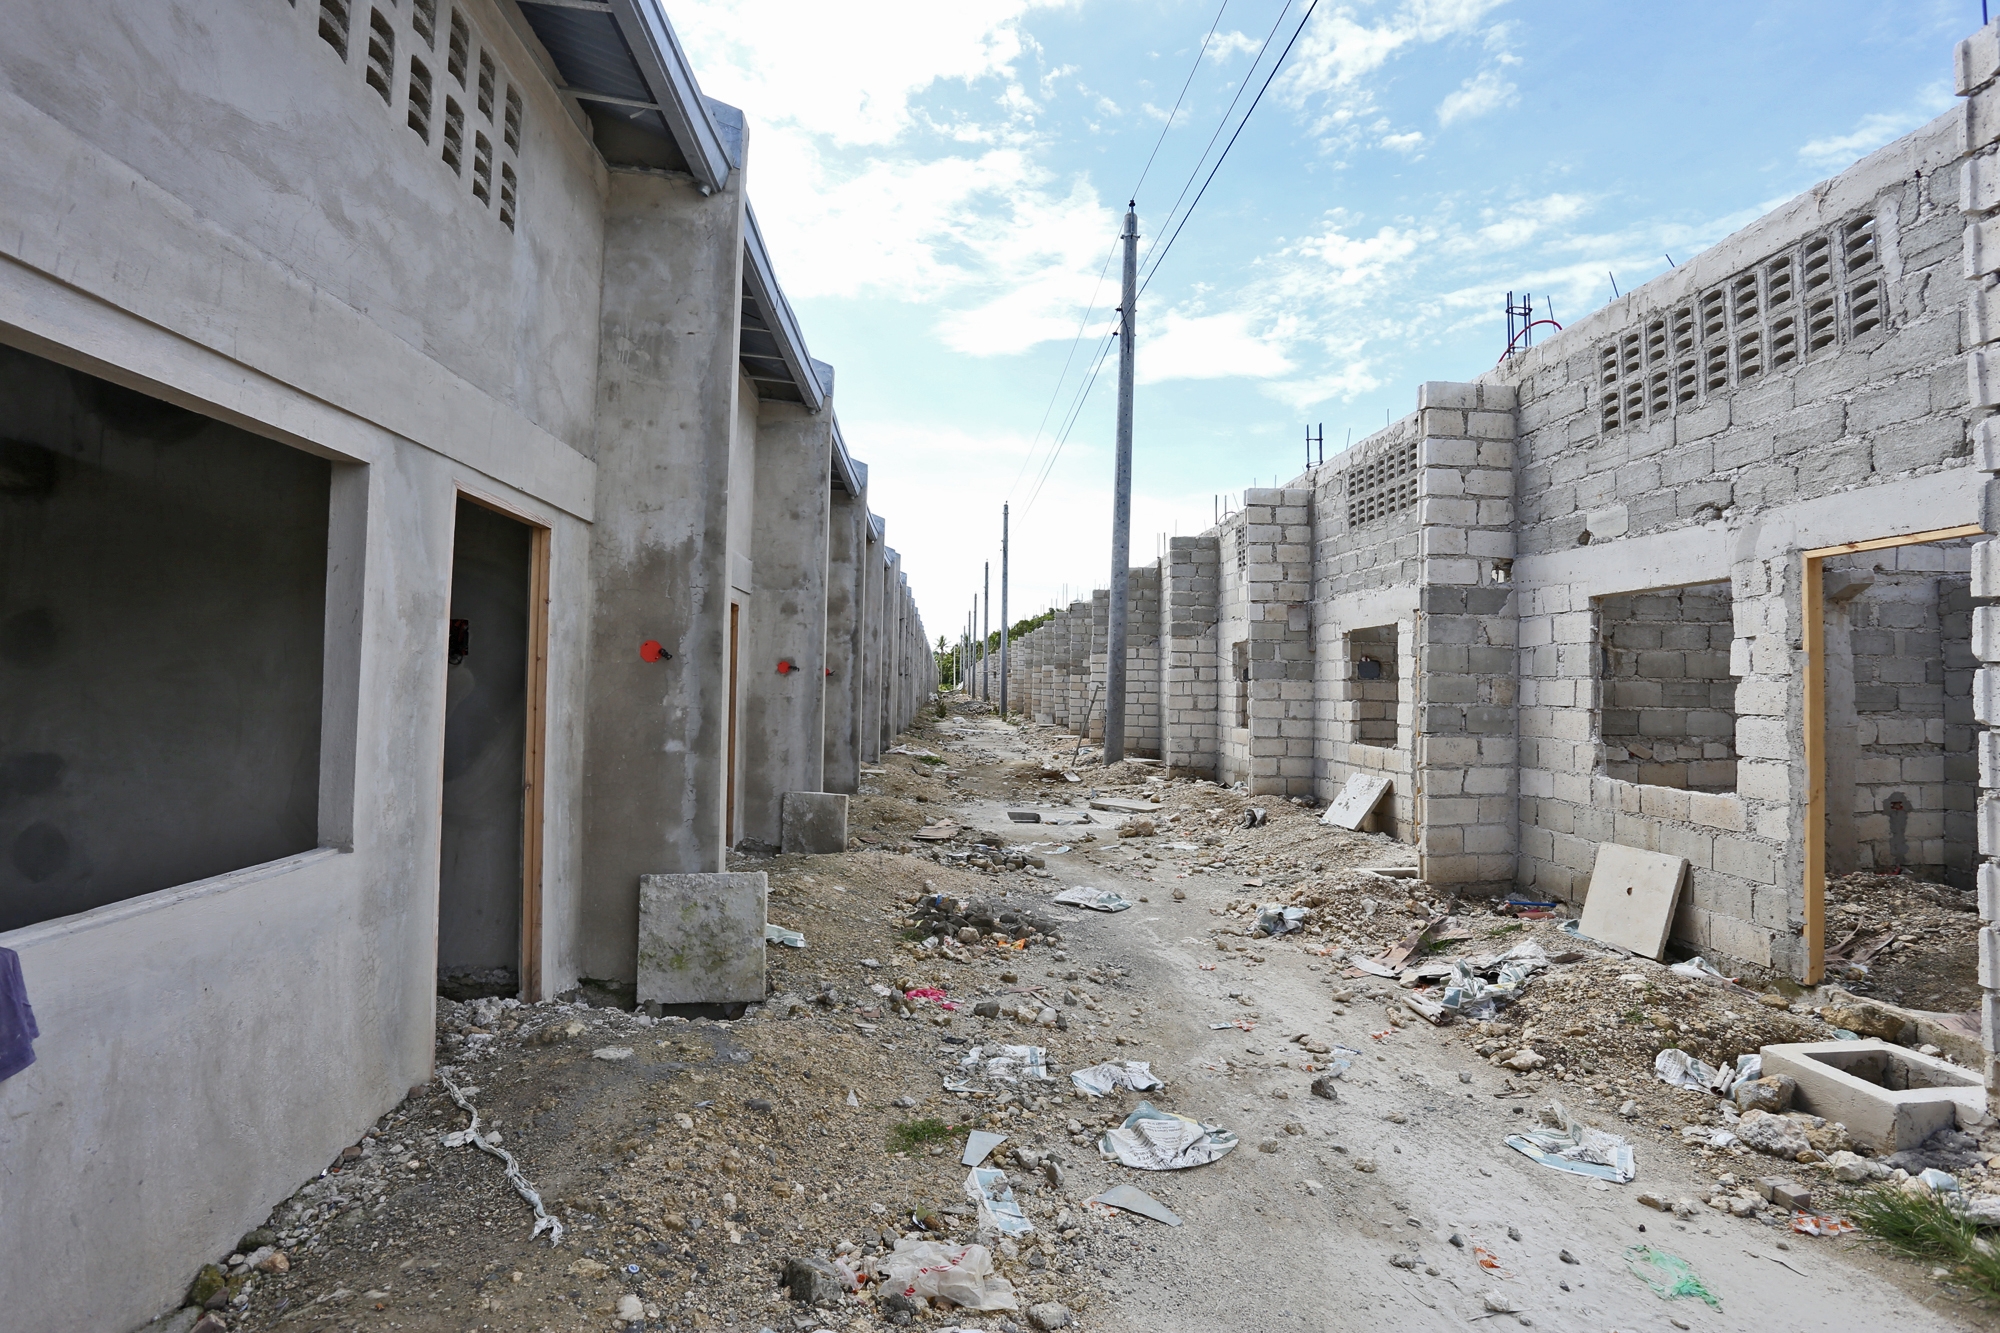  housing at an area devastated by Supertyphoon "Yolanda"